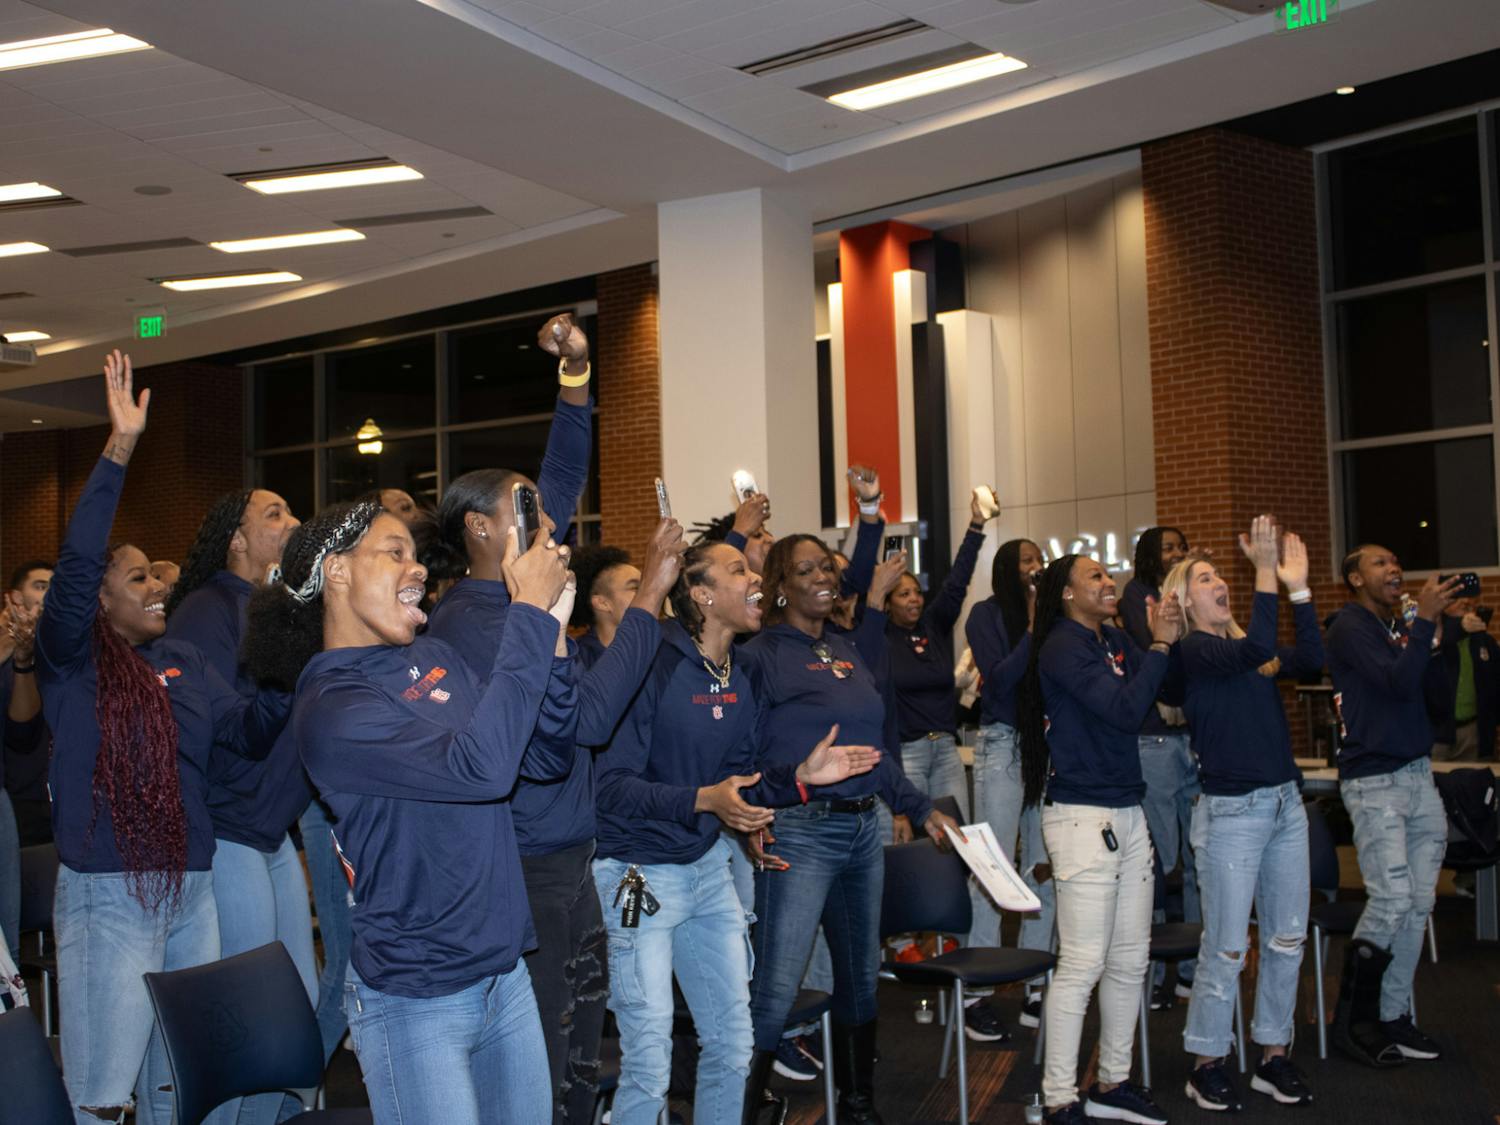 AU Women's Basketball Celebrates getting into the NCAA tournament